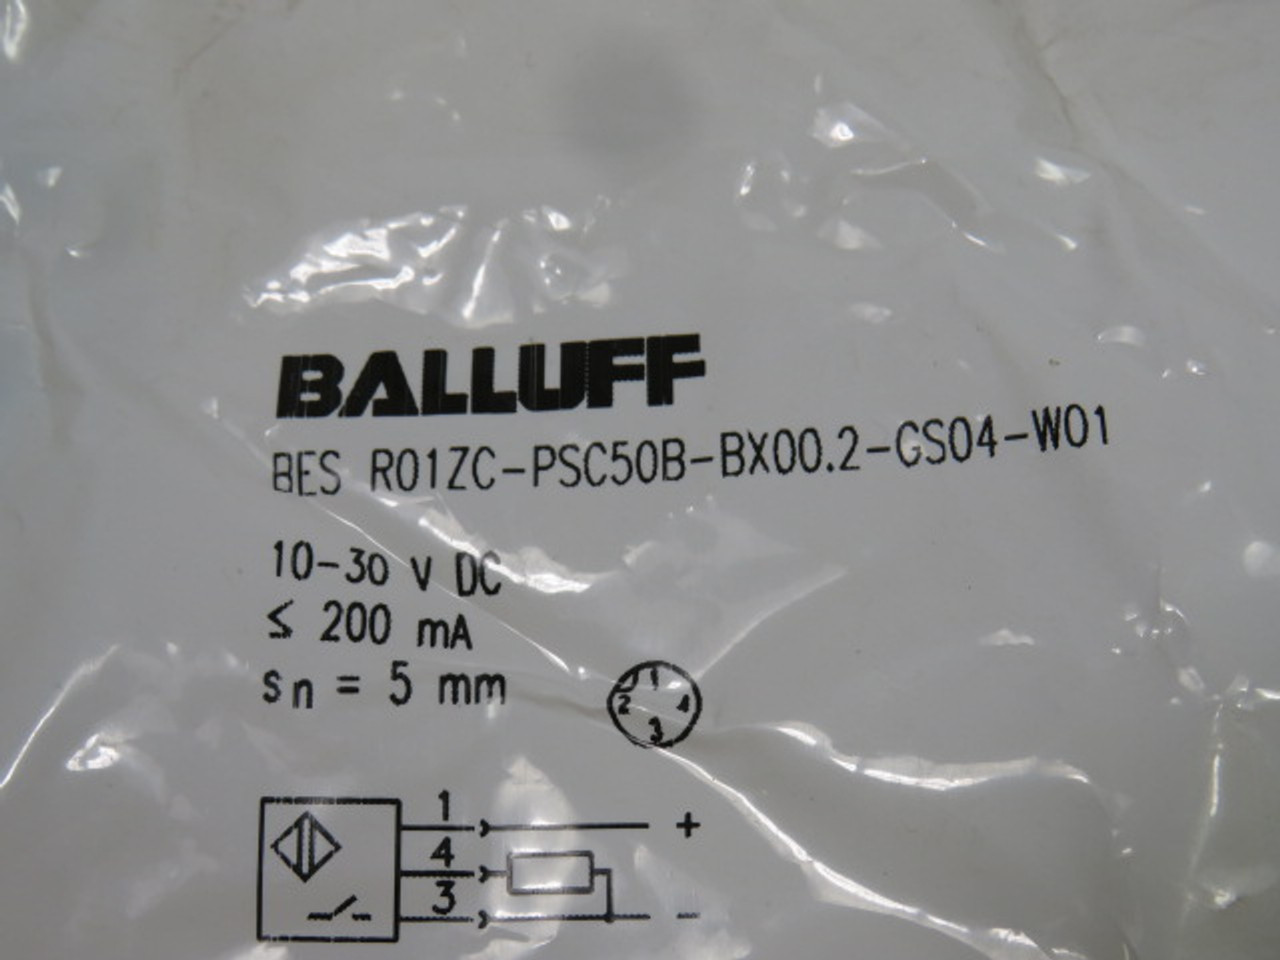 Balluff BES-R01ZC-PSC50B-BX00.2-GS04-W01 Proximity Sensor 10-30Vdc 200mA ! NWB !